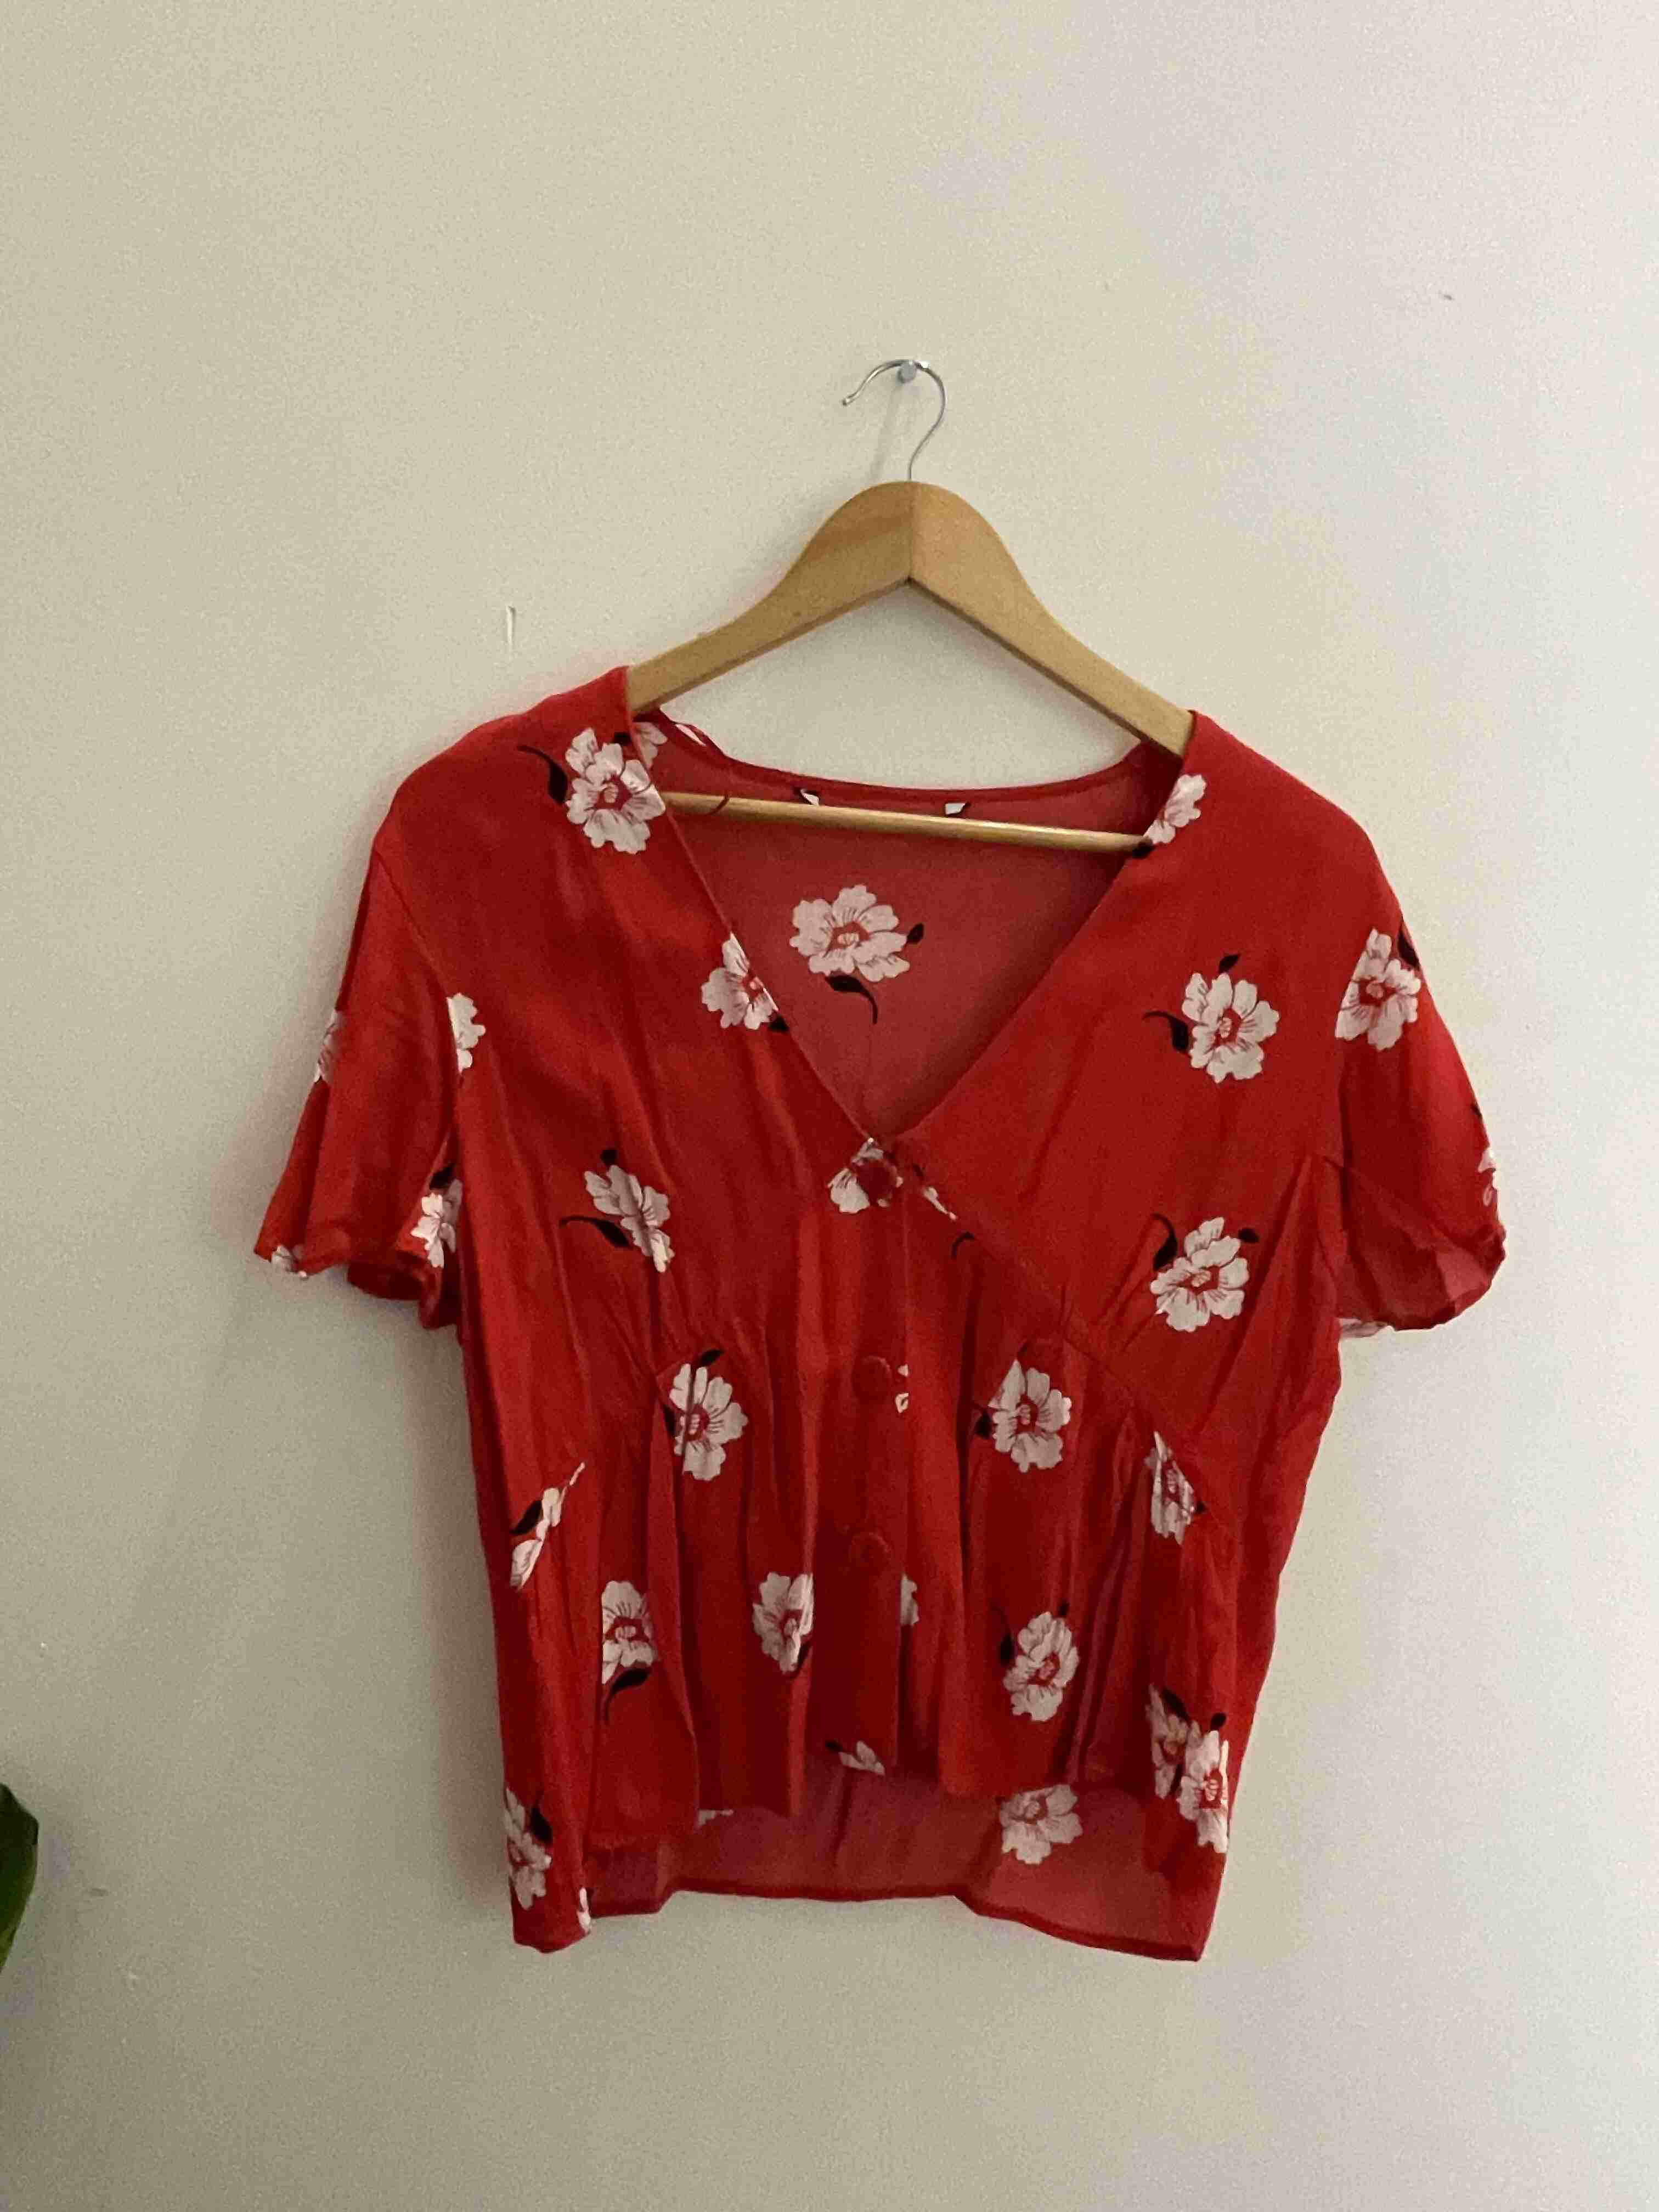 Vintage womens vneck red floral pattern top size S